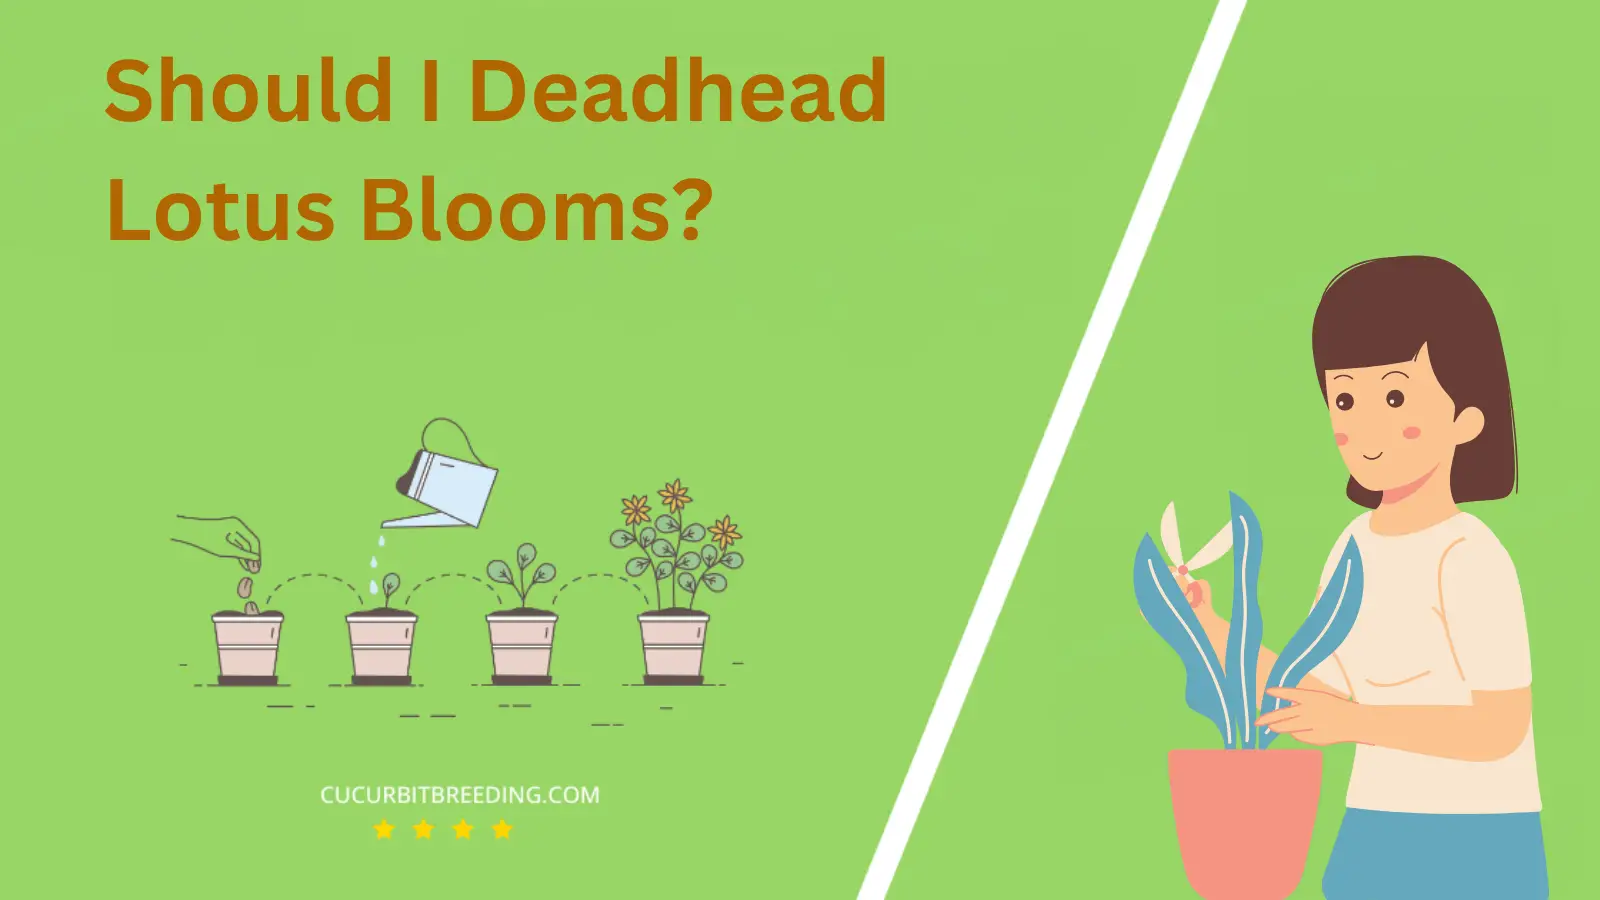 Should I Deadhead Lotus Blooms?